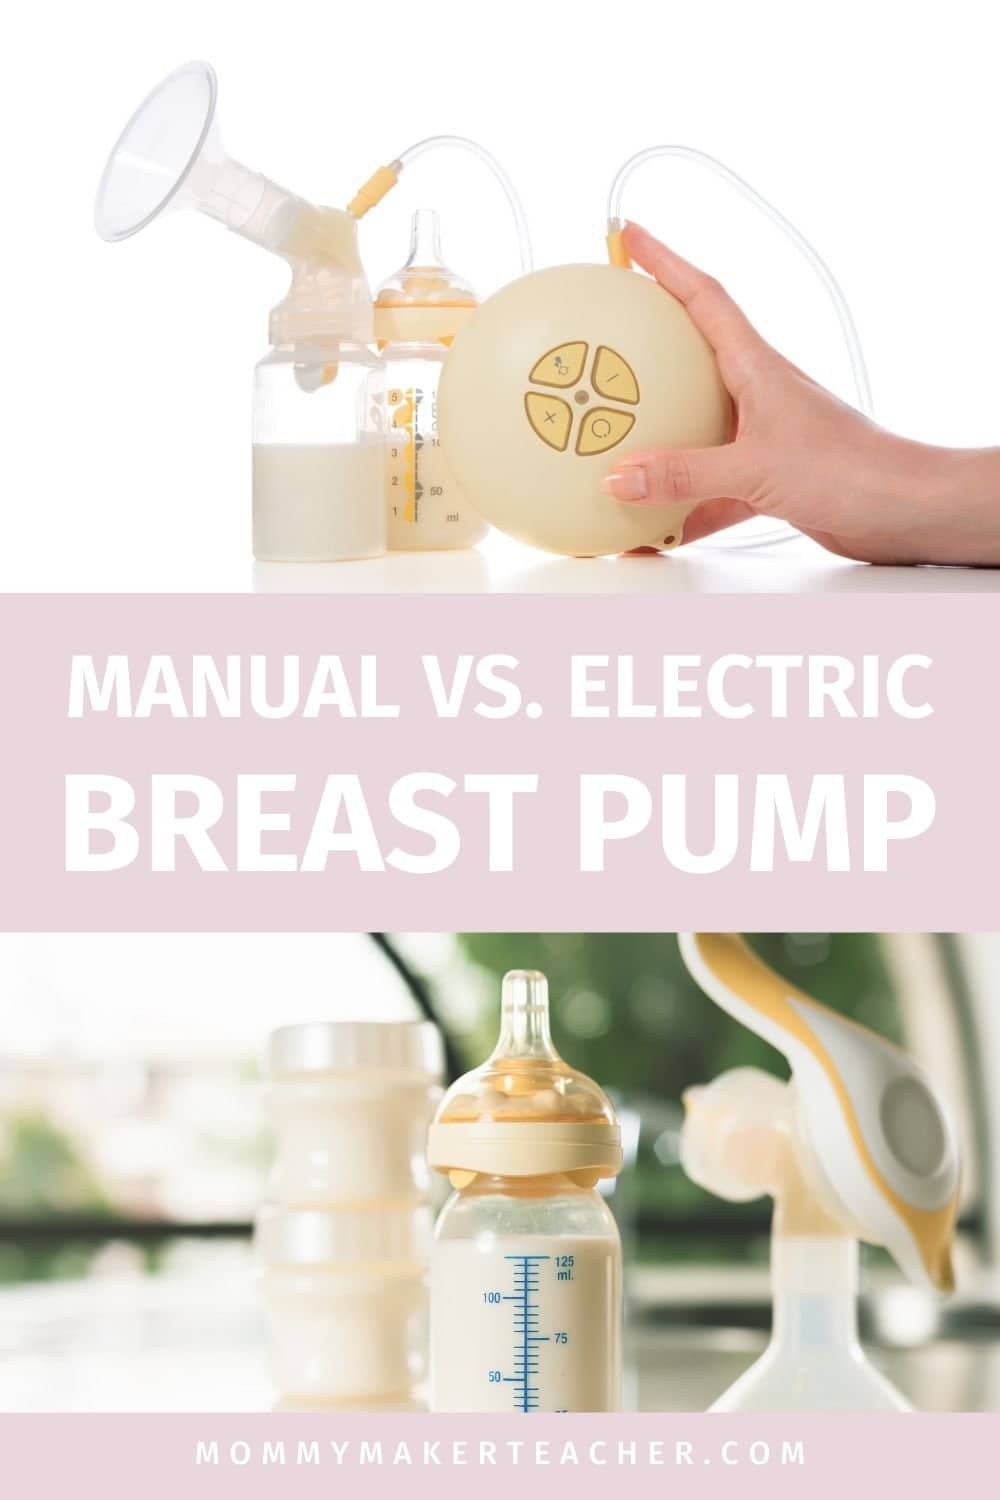 Manual vs. Electric Breast Pump Mommymakerteacher.com Medela electric breast pump and Medela Harmony manual breast pump on a counter